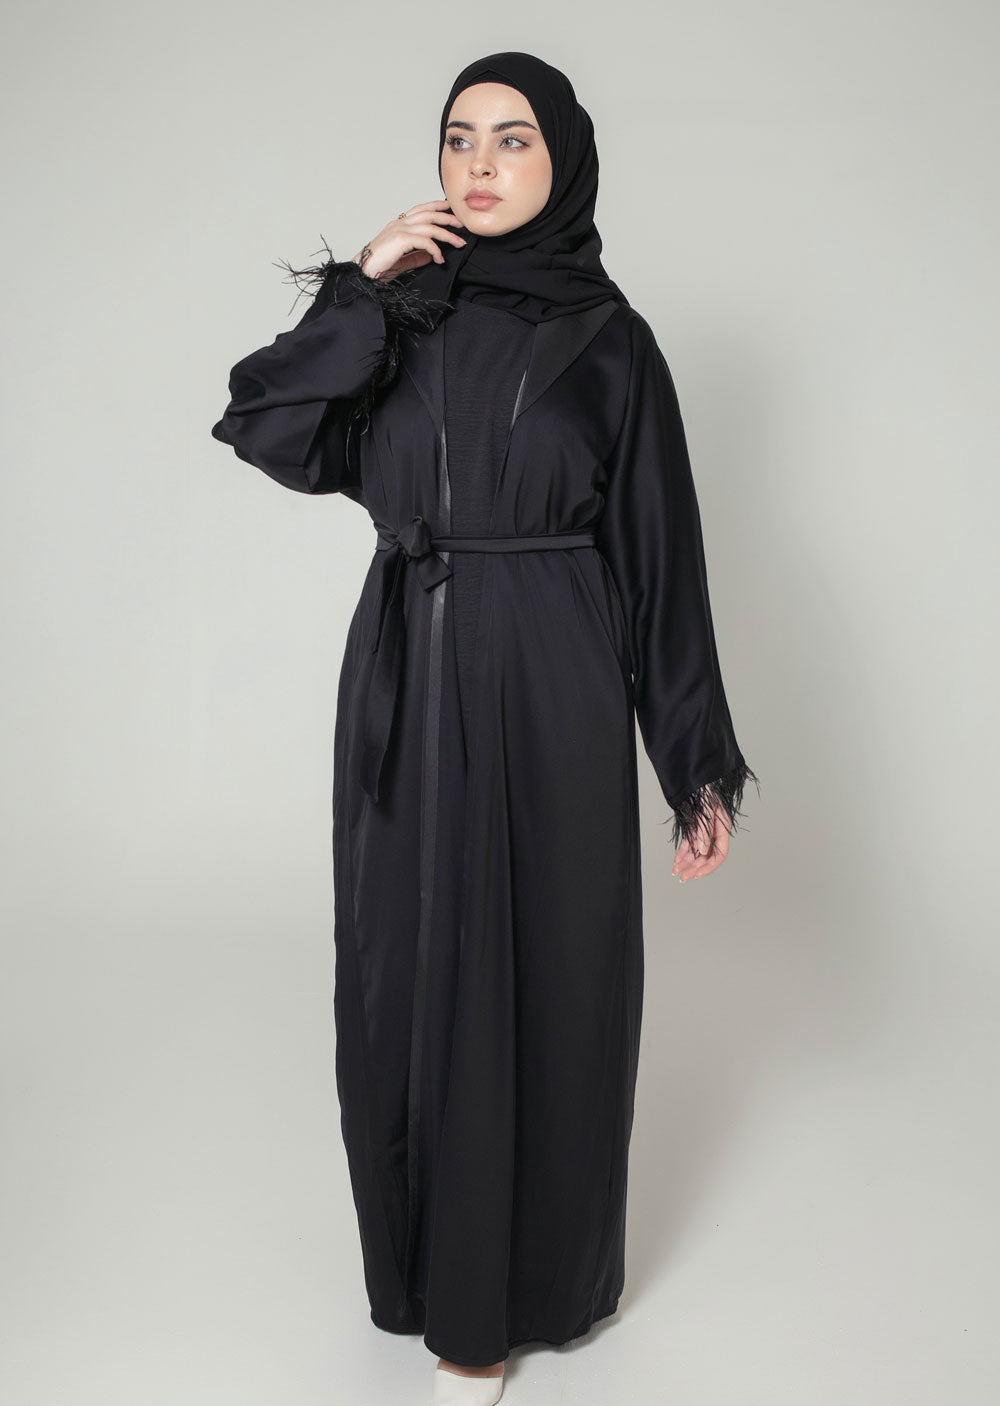 DSL-12 Hanna -Black Jacket Style Abaya Set - Memsaab Online